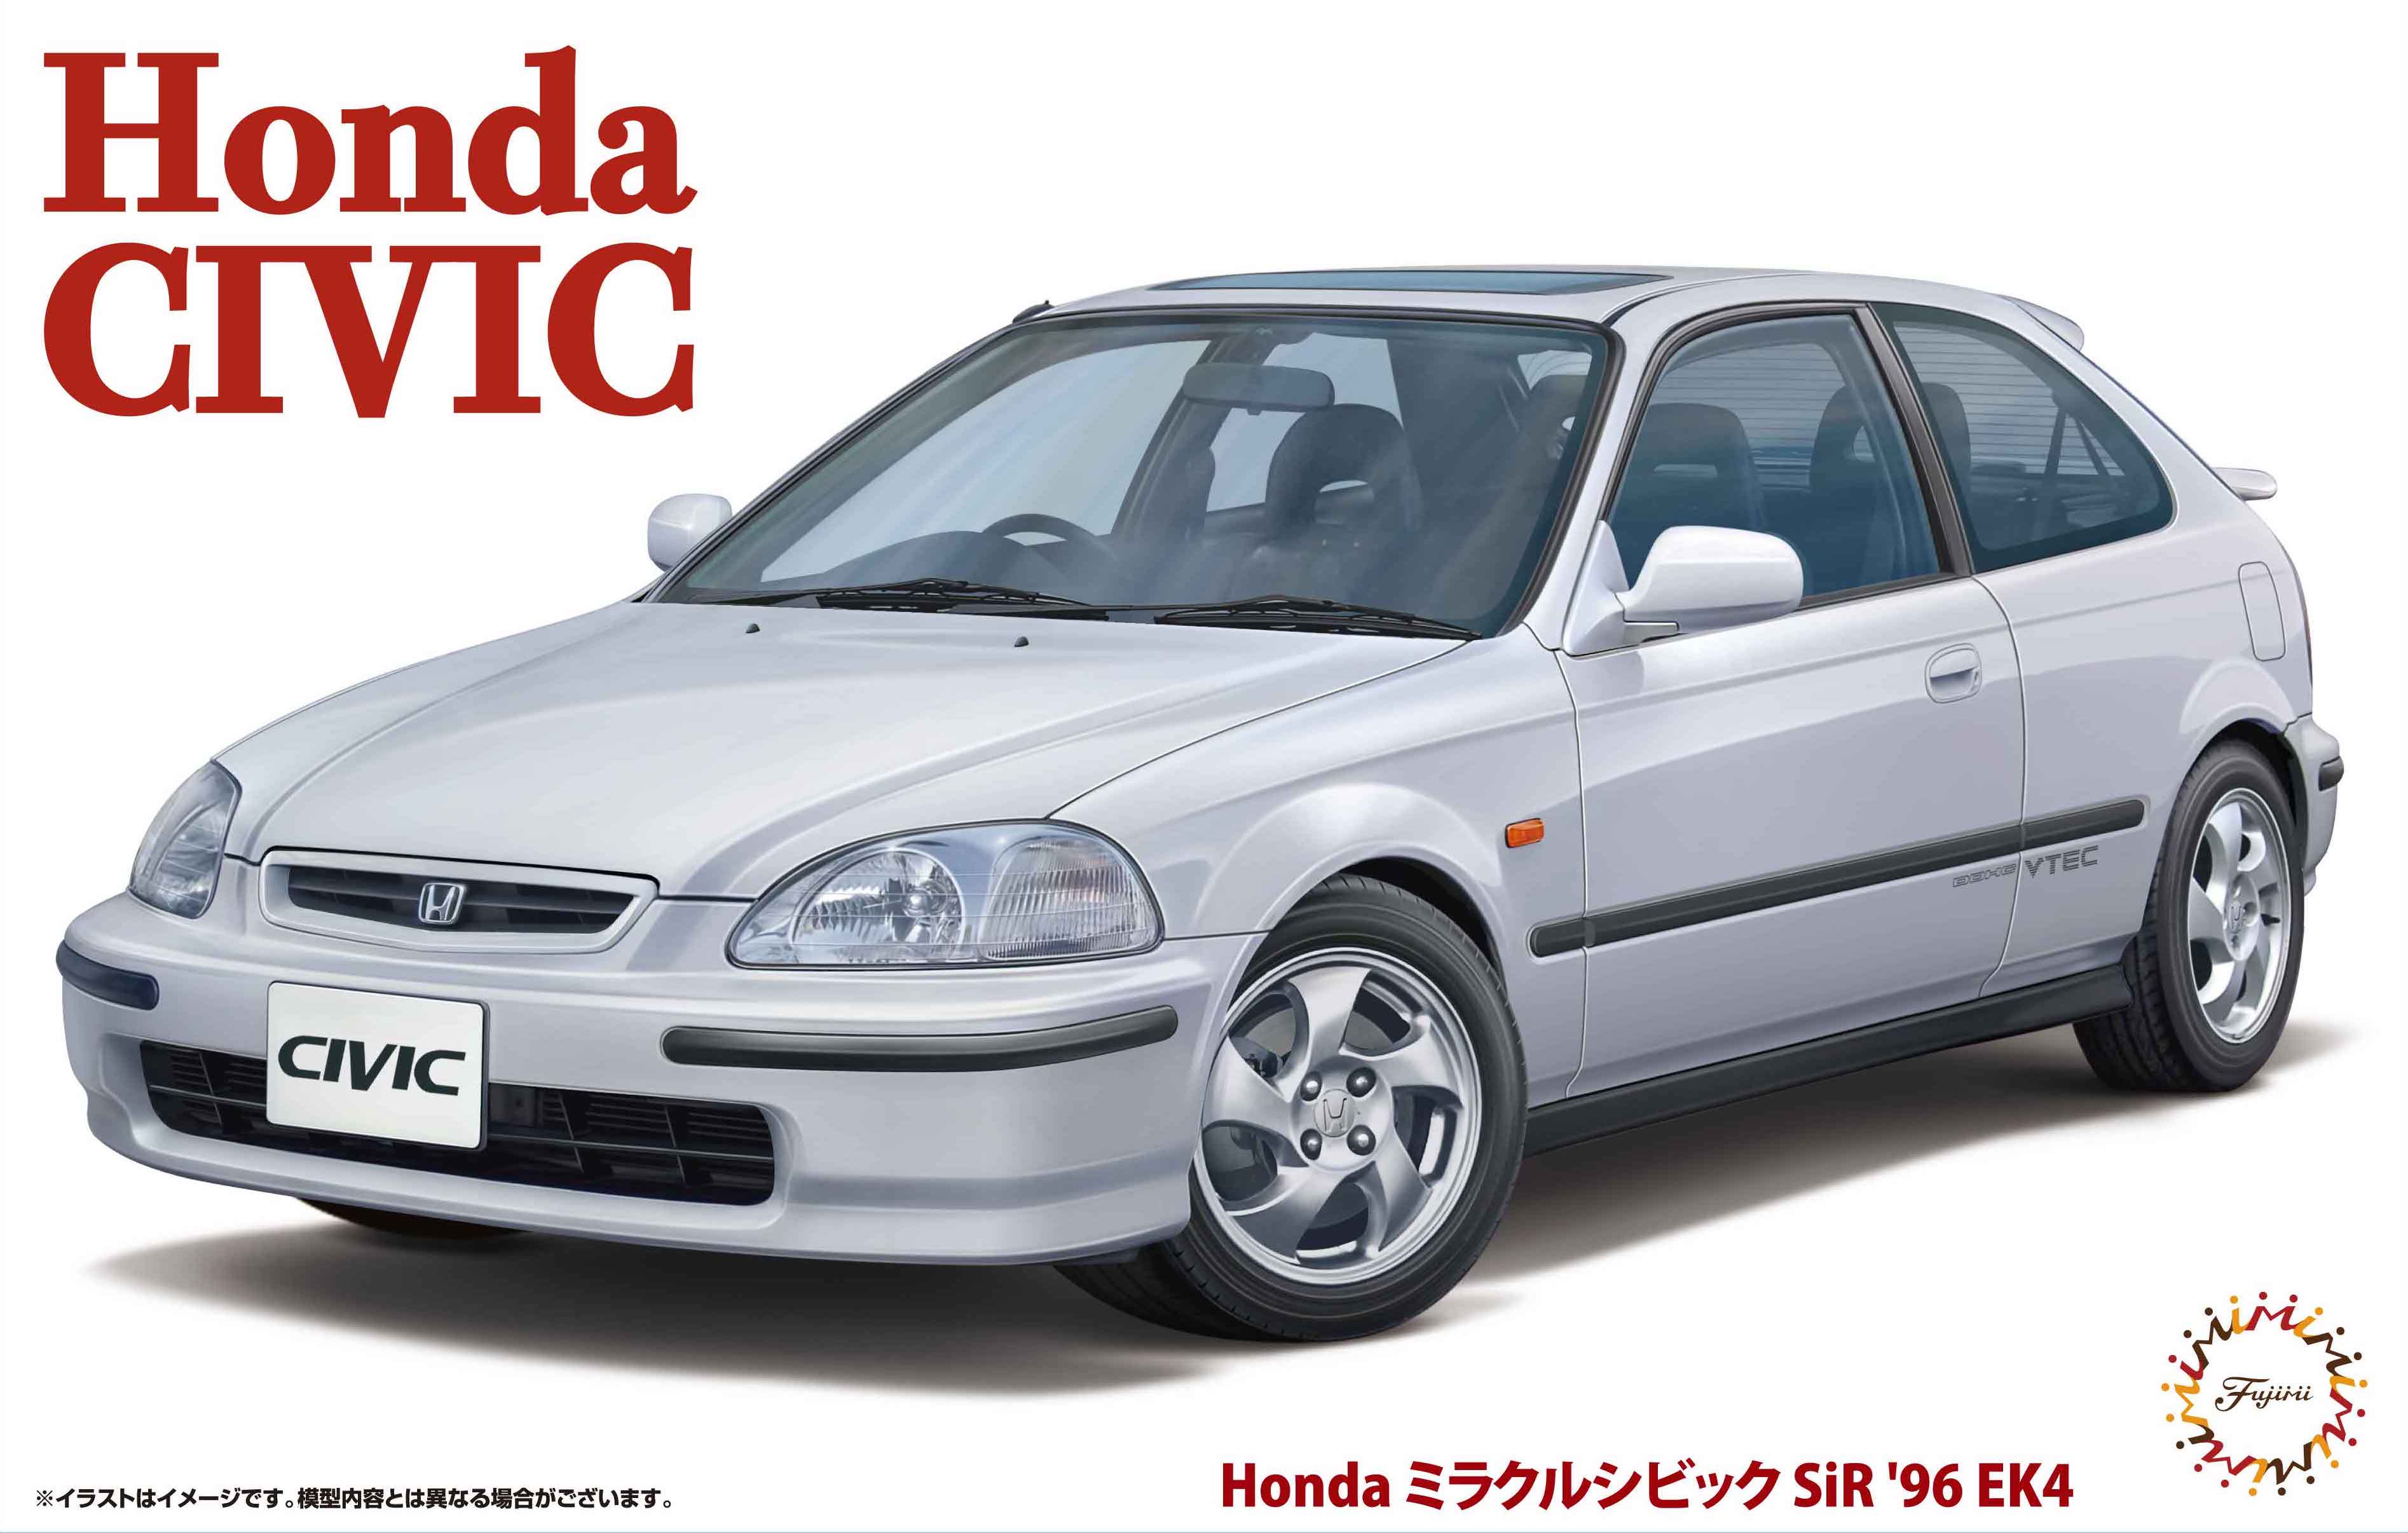 1/24 Honda ミラクルシビック SiR '96 EK4 タムタムオンラインショップ